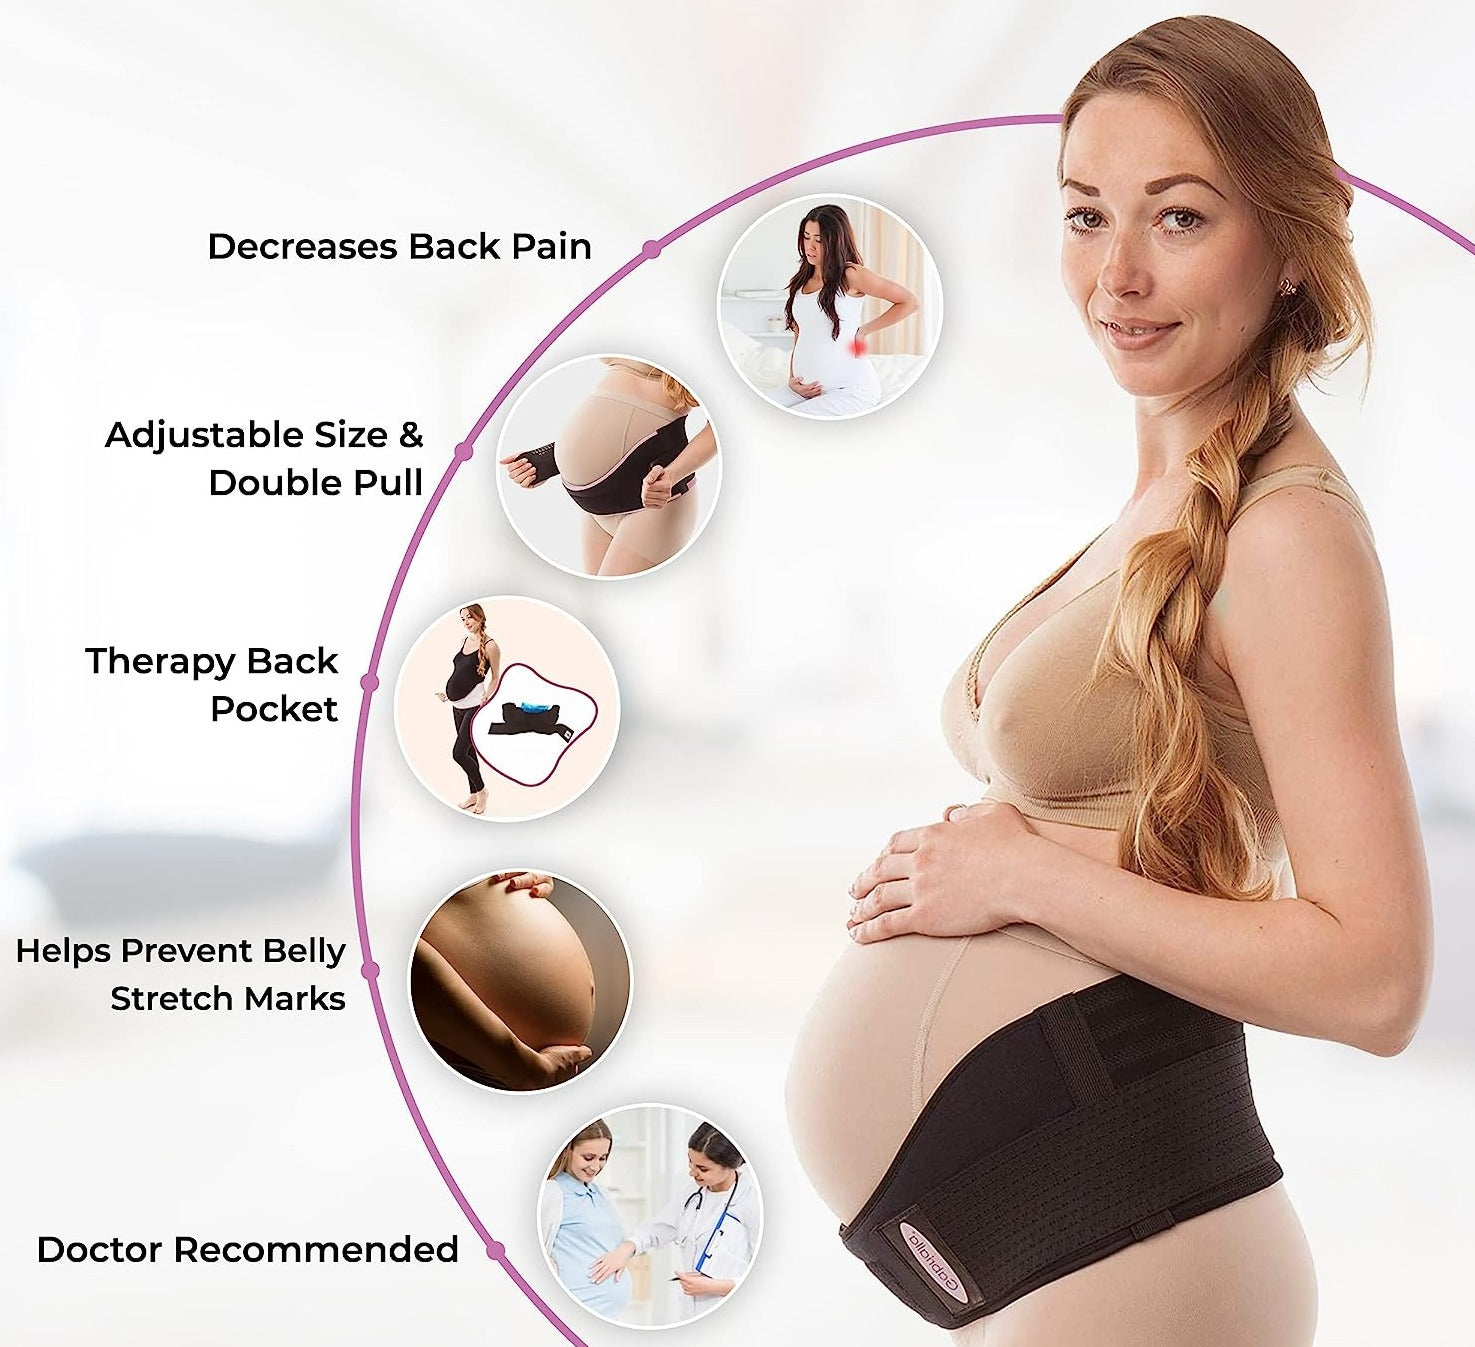 Pregnant Women Belly Belt Prenatal Care Athletic Bandage Girdle